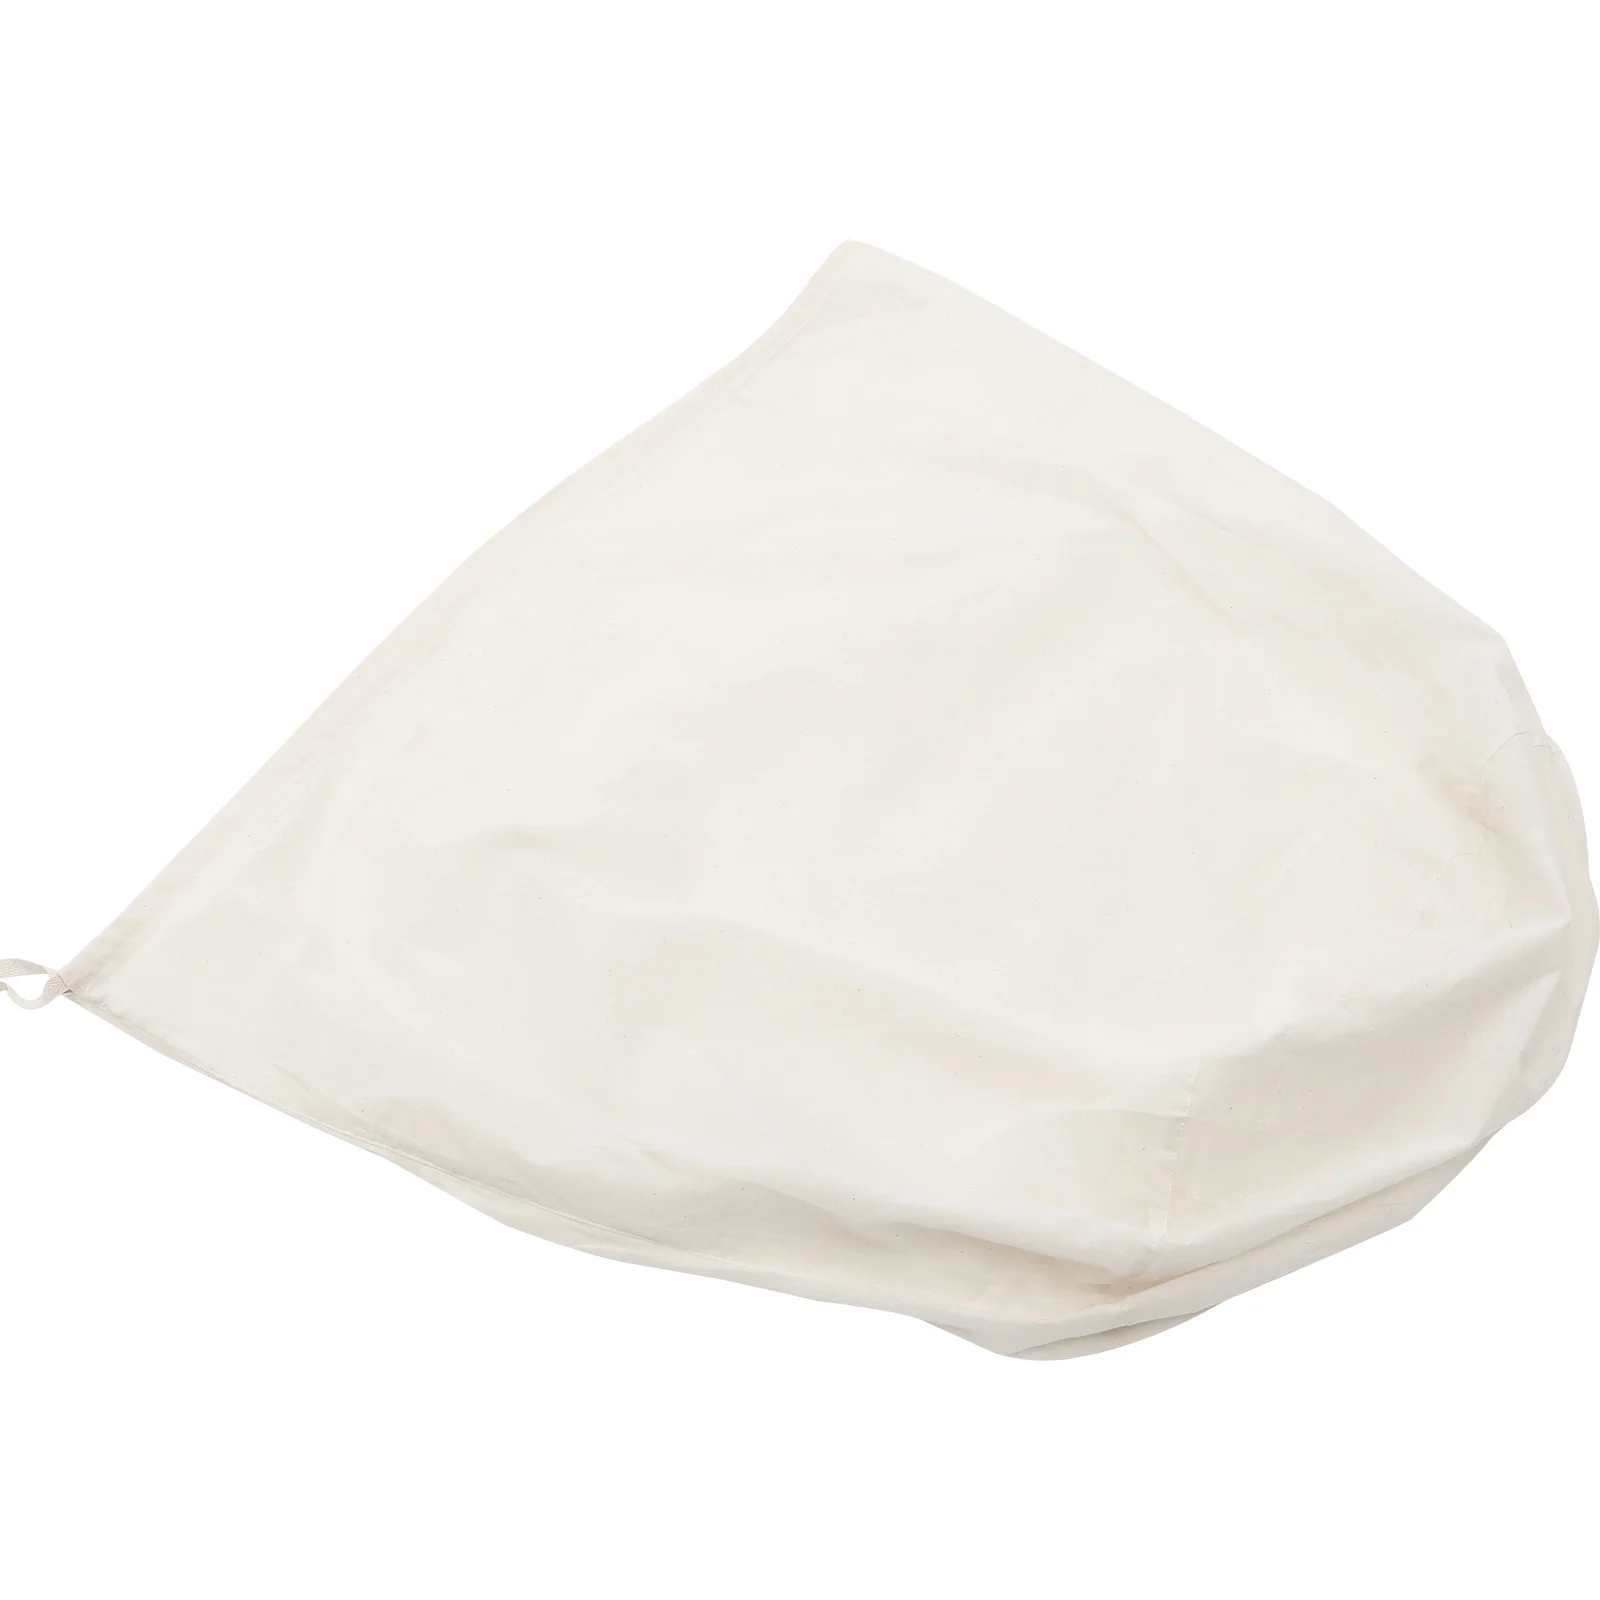 

Bag Bags Filter Strainer Coffeebrew Mesh Nut Straining Cheeseclothtea Juicecheese Clothsfine Reusable Cloth Nylon Drawstring